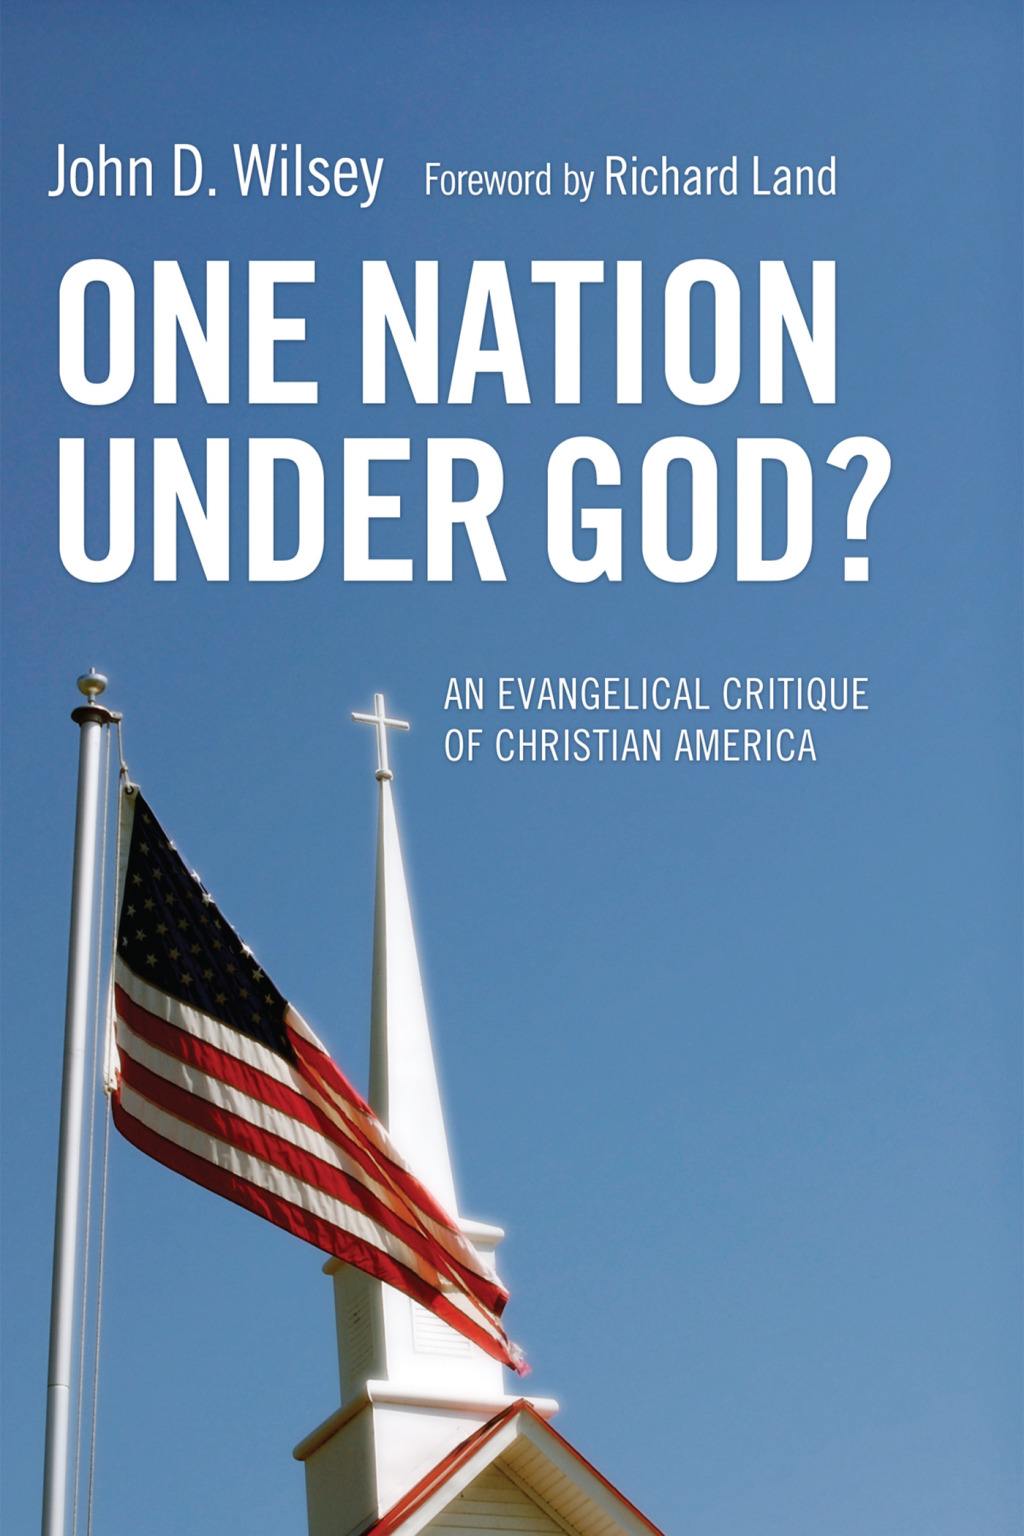 One Nation Under God? (eBook) - John D. Wilsey